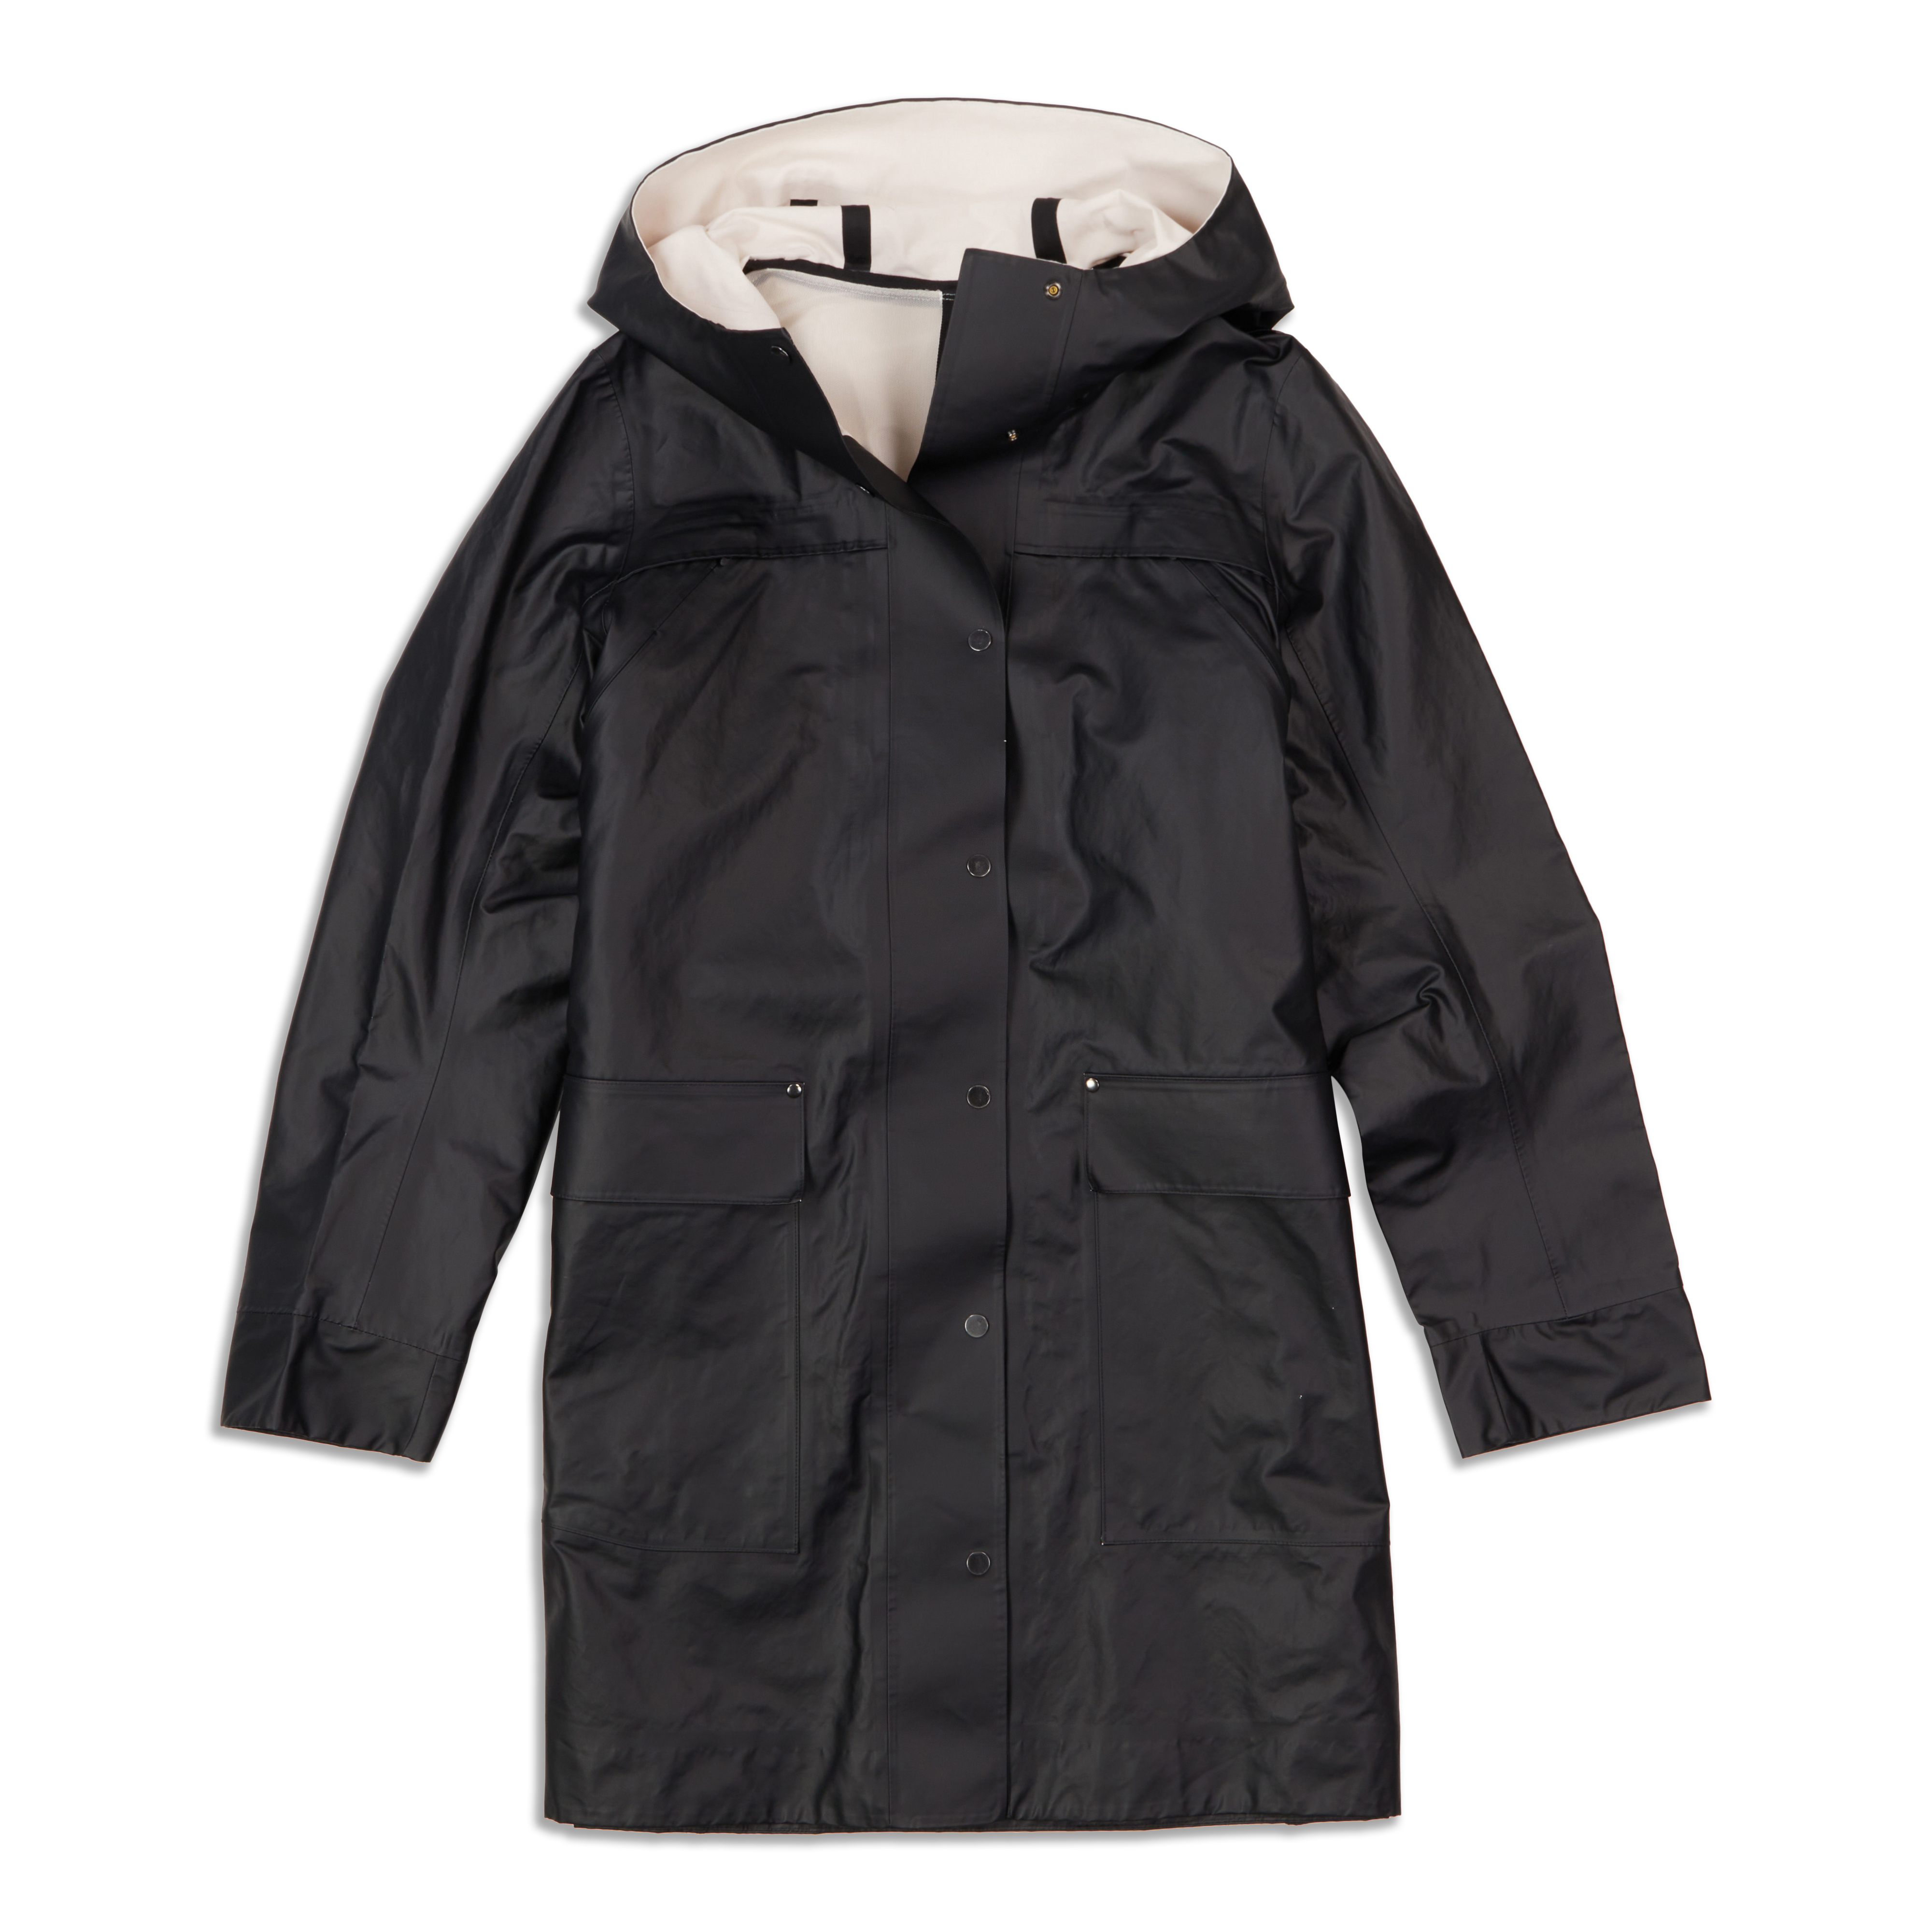 lululemon Into the Drizzle Rain Coat Jacket Women's Size 8 $248 Pink